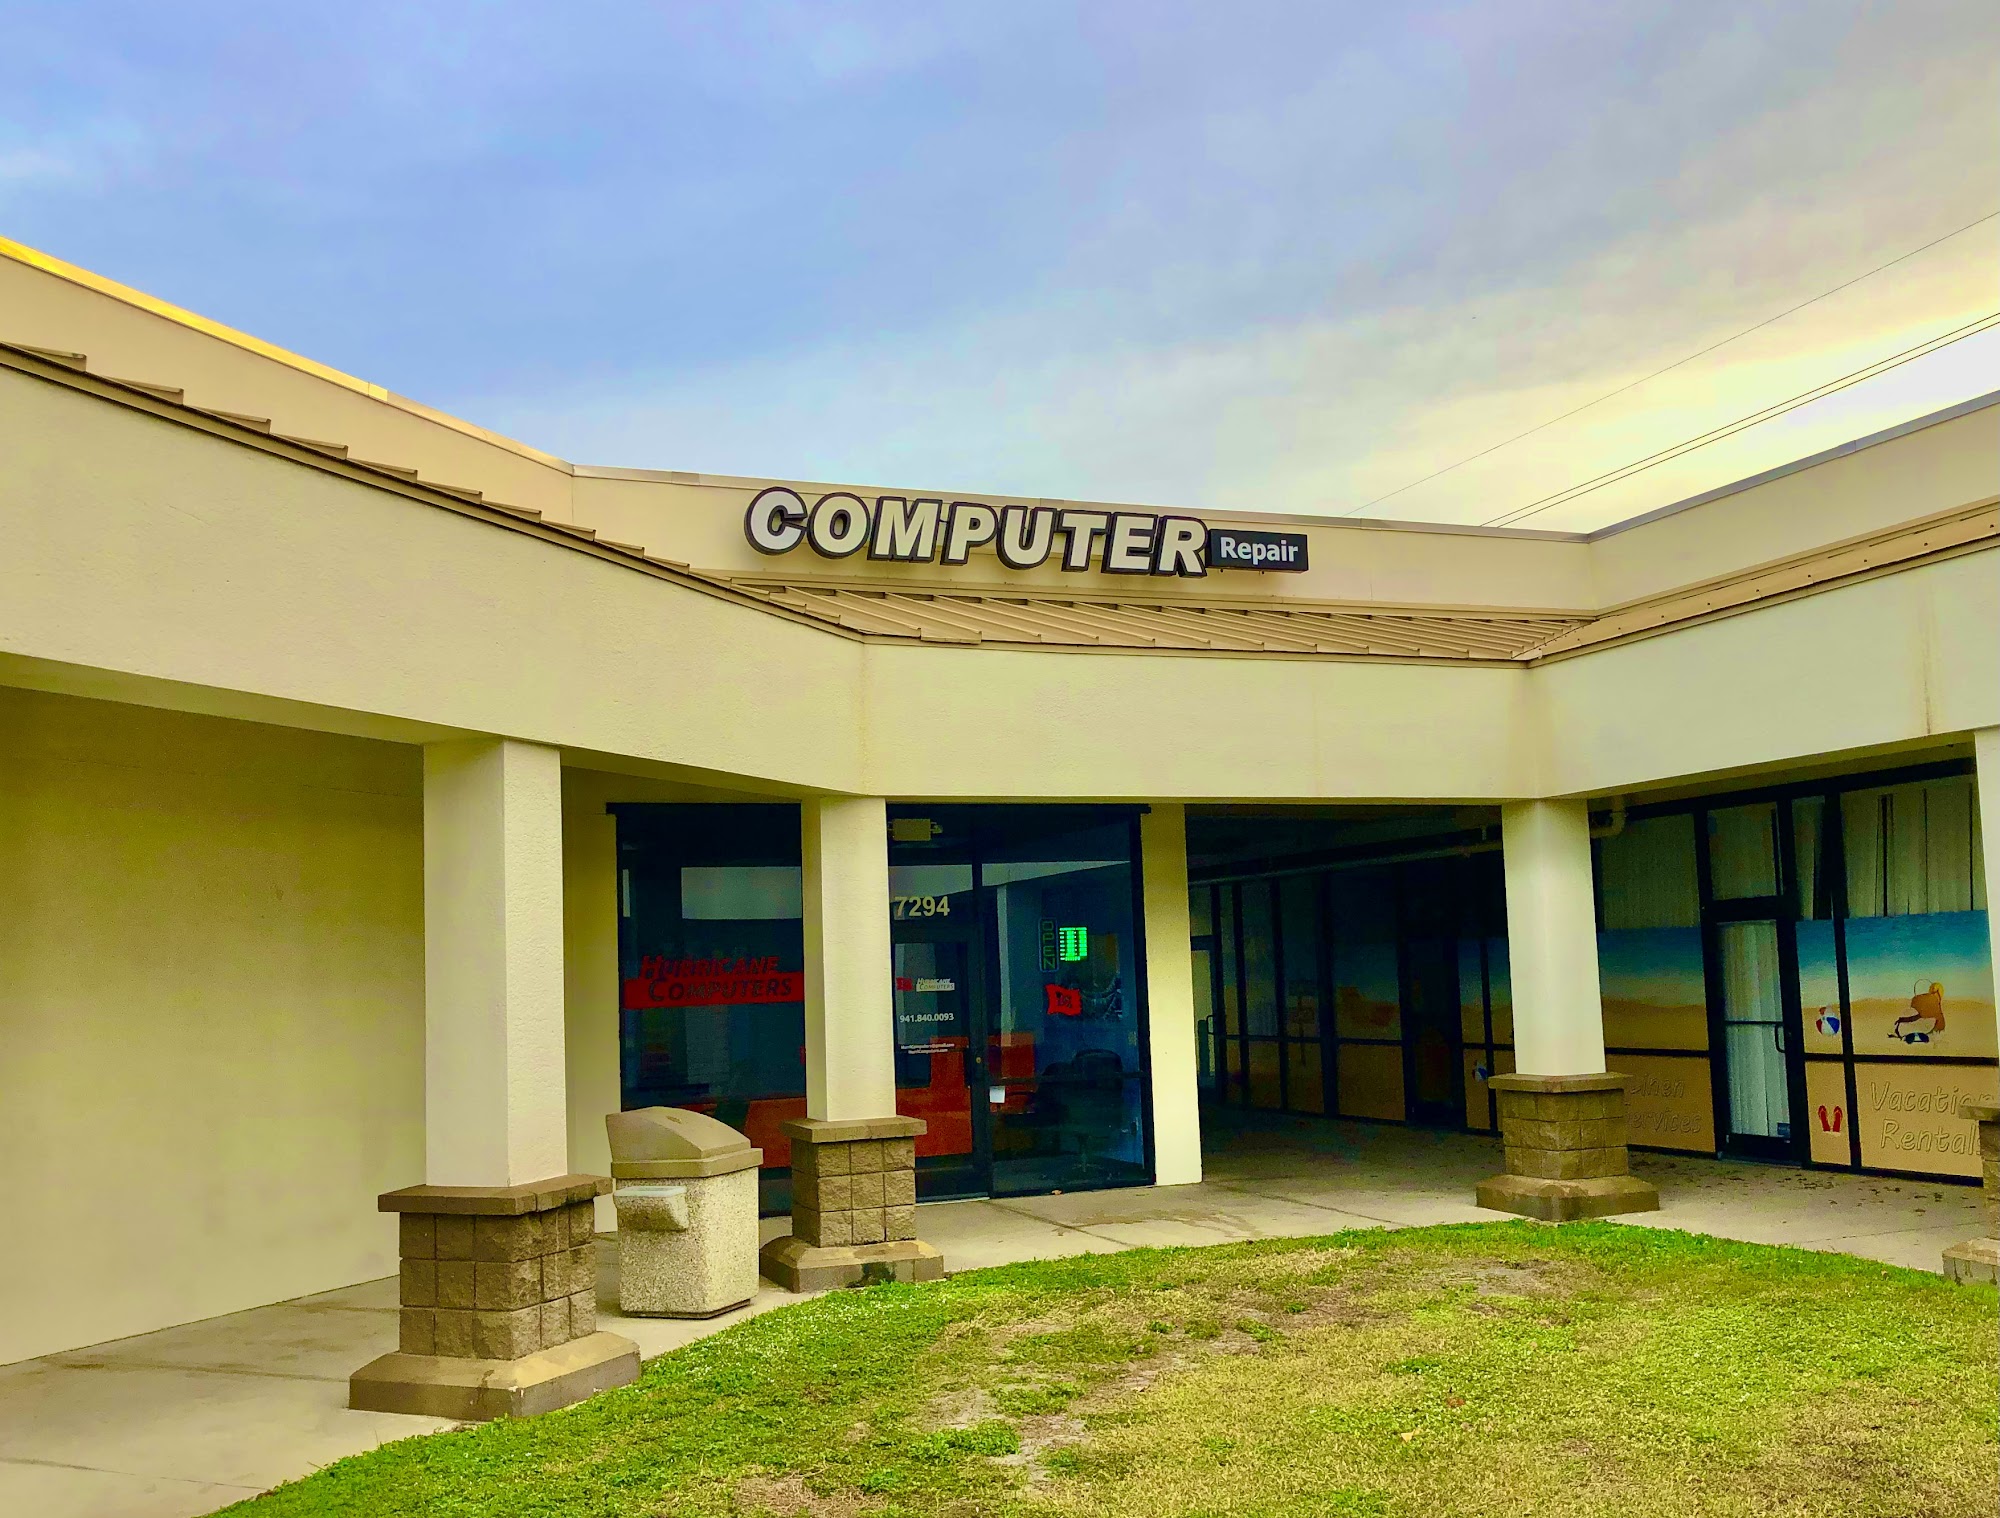 Hurricane Computers LLC